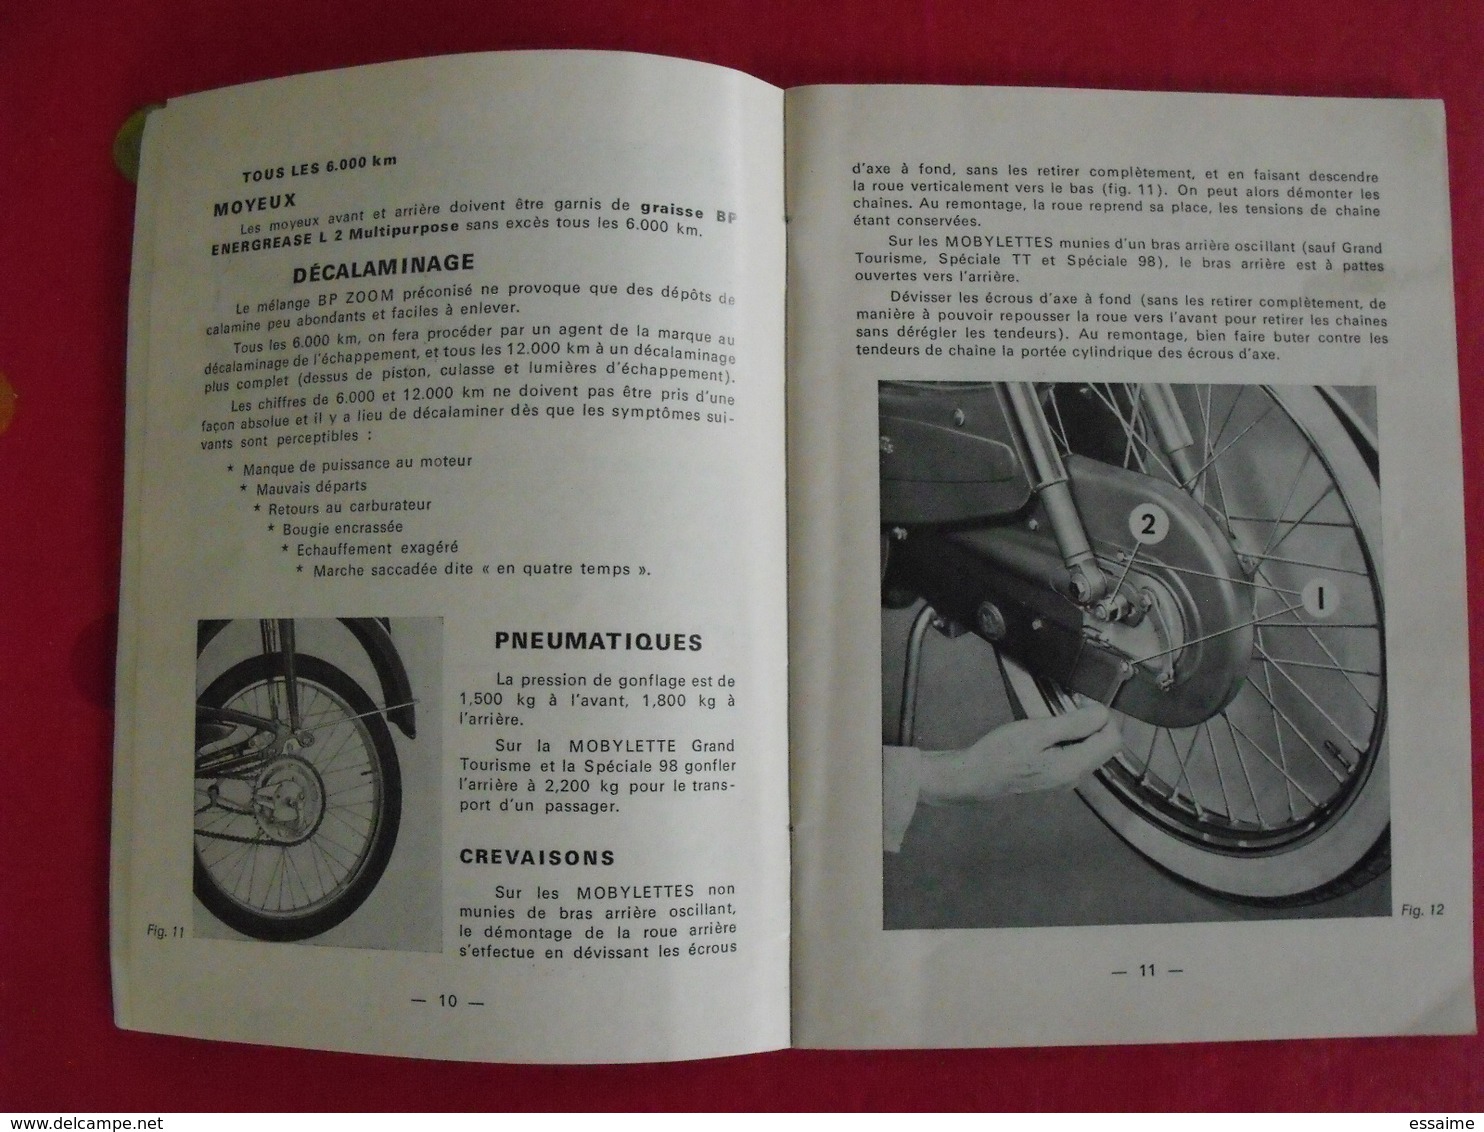 Livret Entretien Mobylette Motoconfort Bicyclette Motorisée BP-zoom. 1971 - Motorfietsen